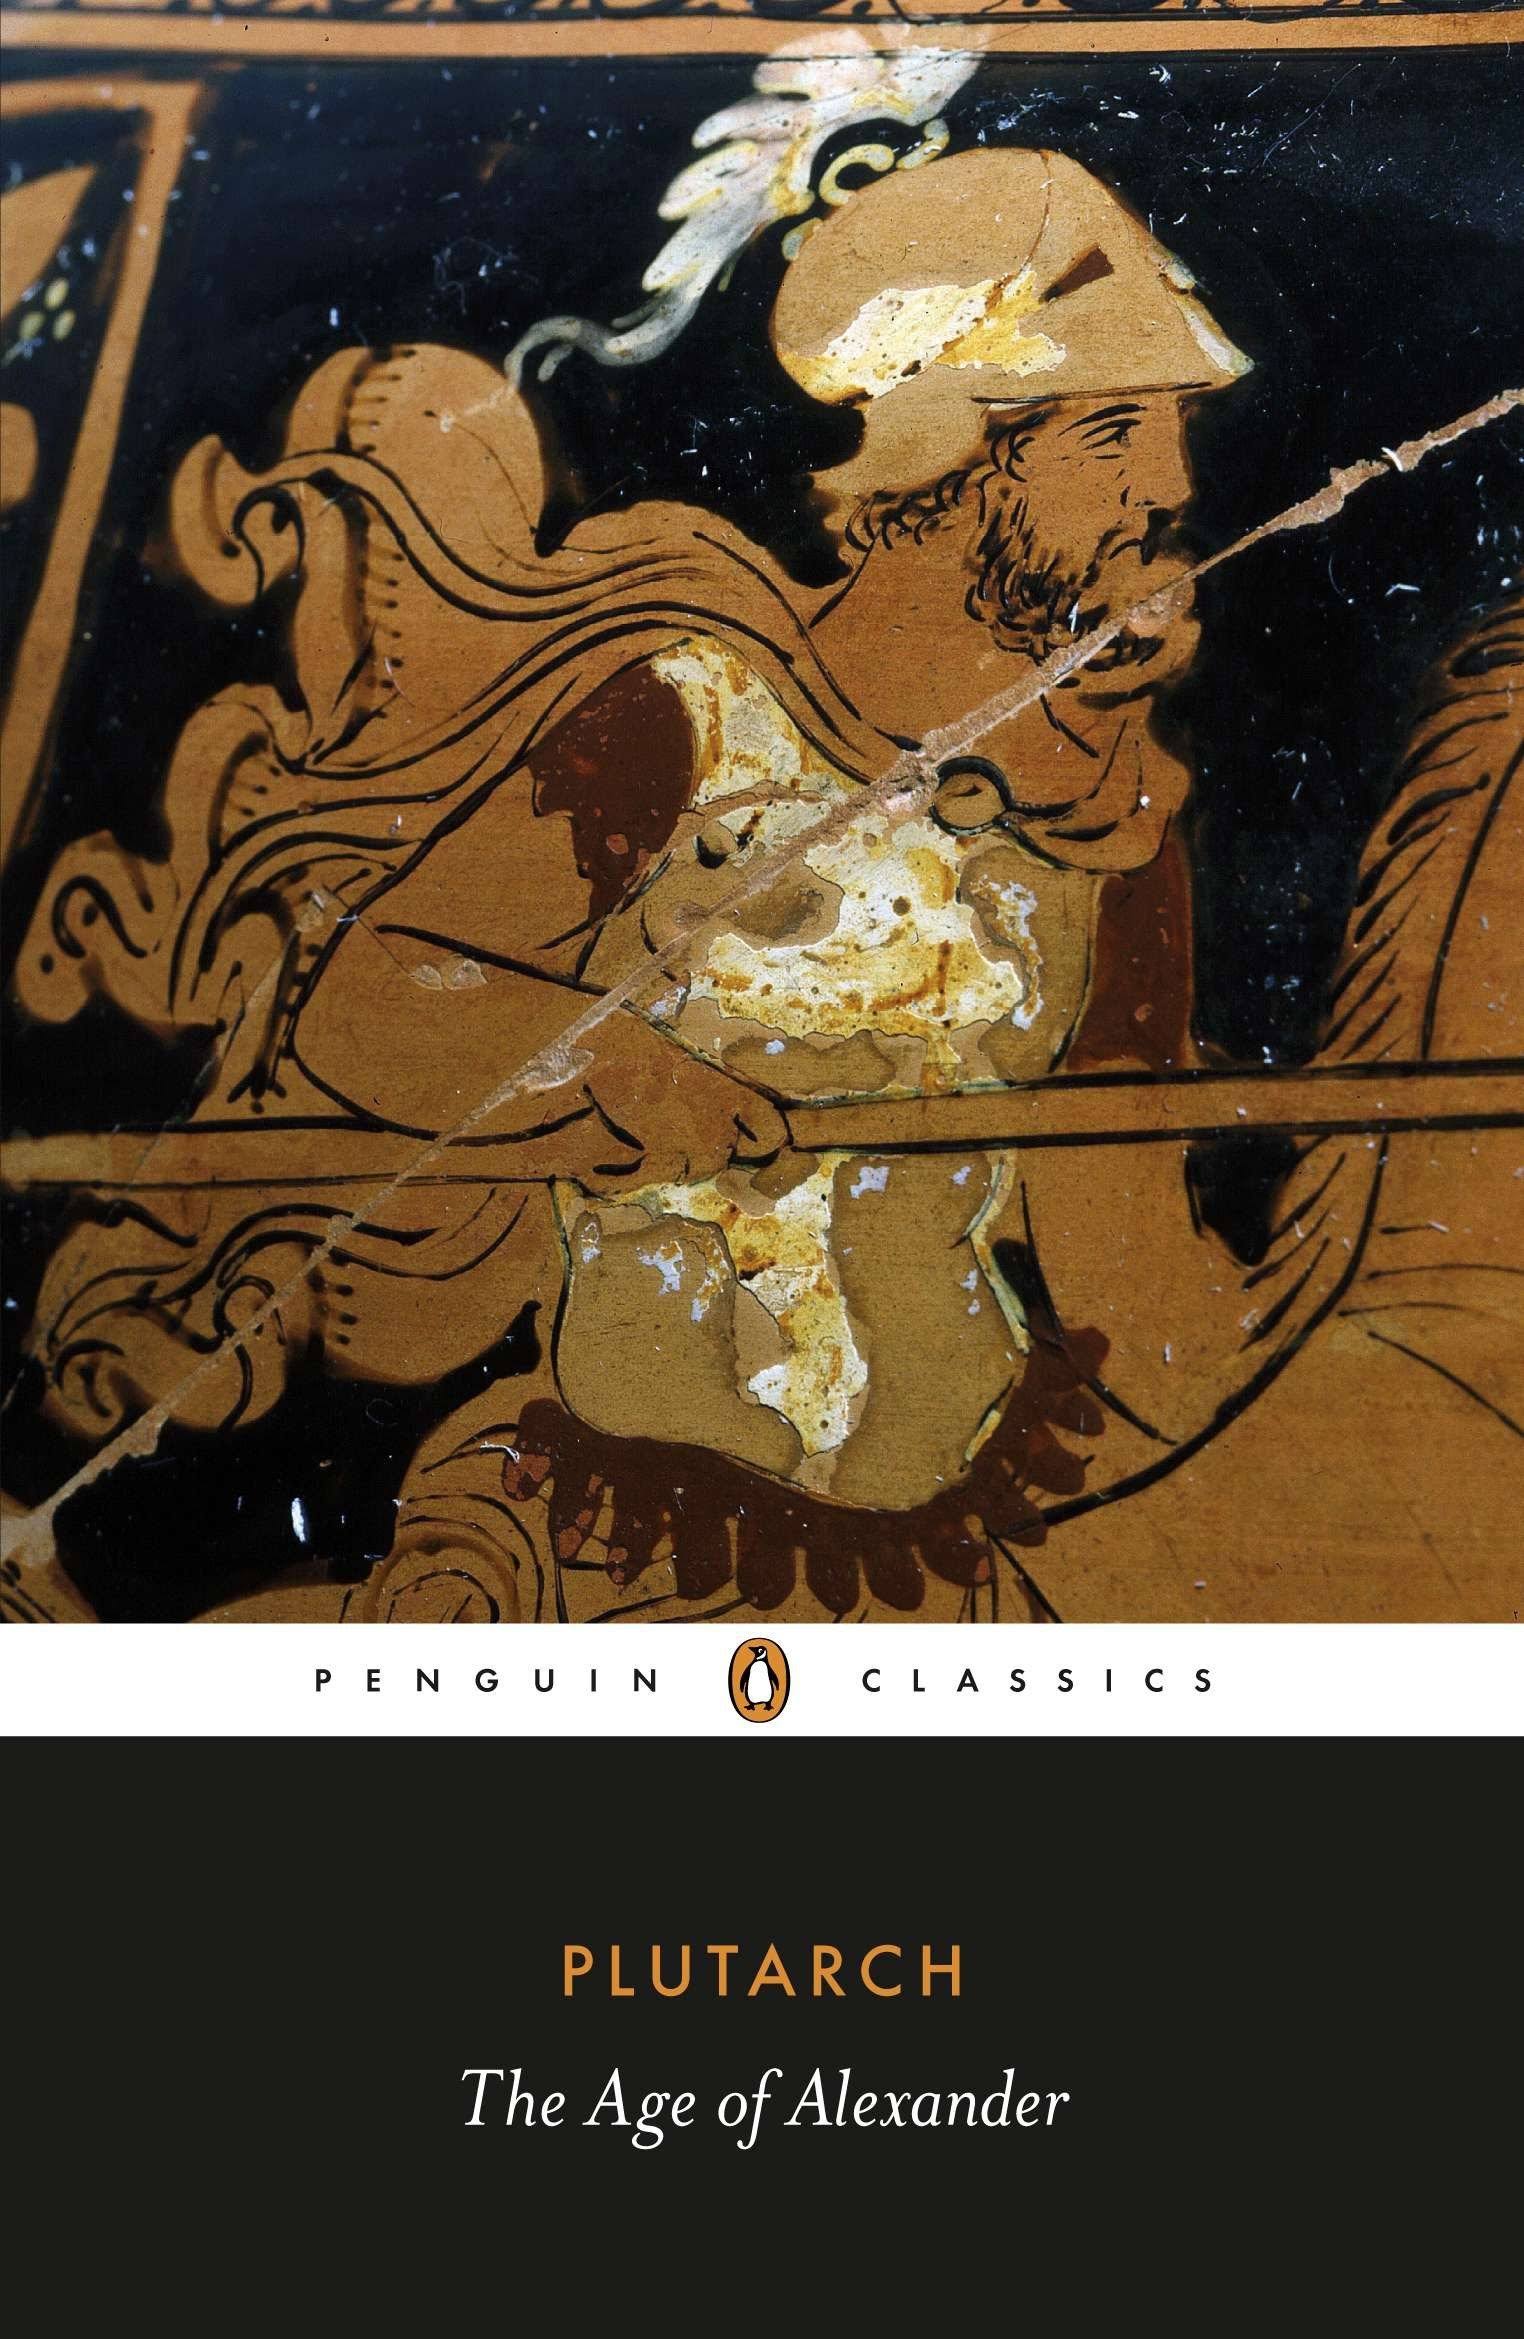 Penguin Classics: The Age of Alexander